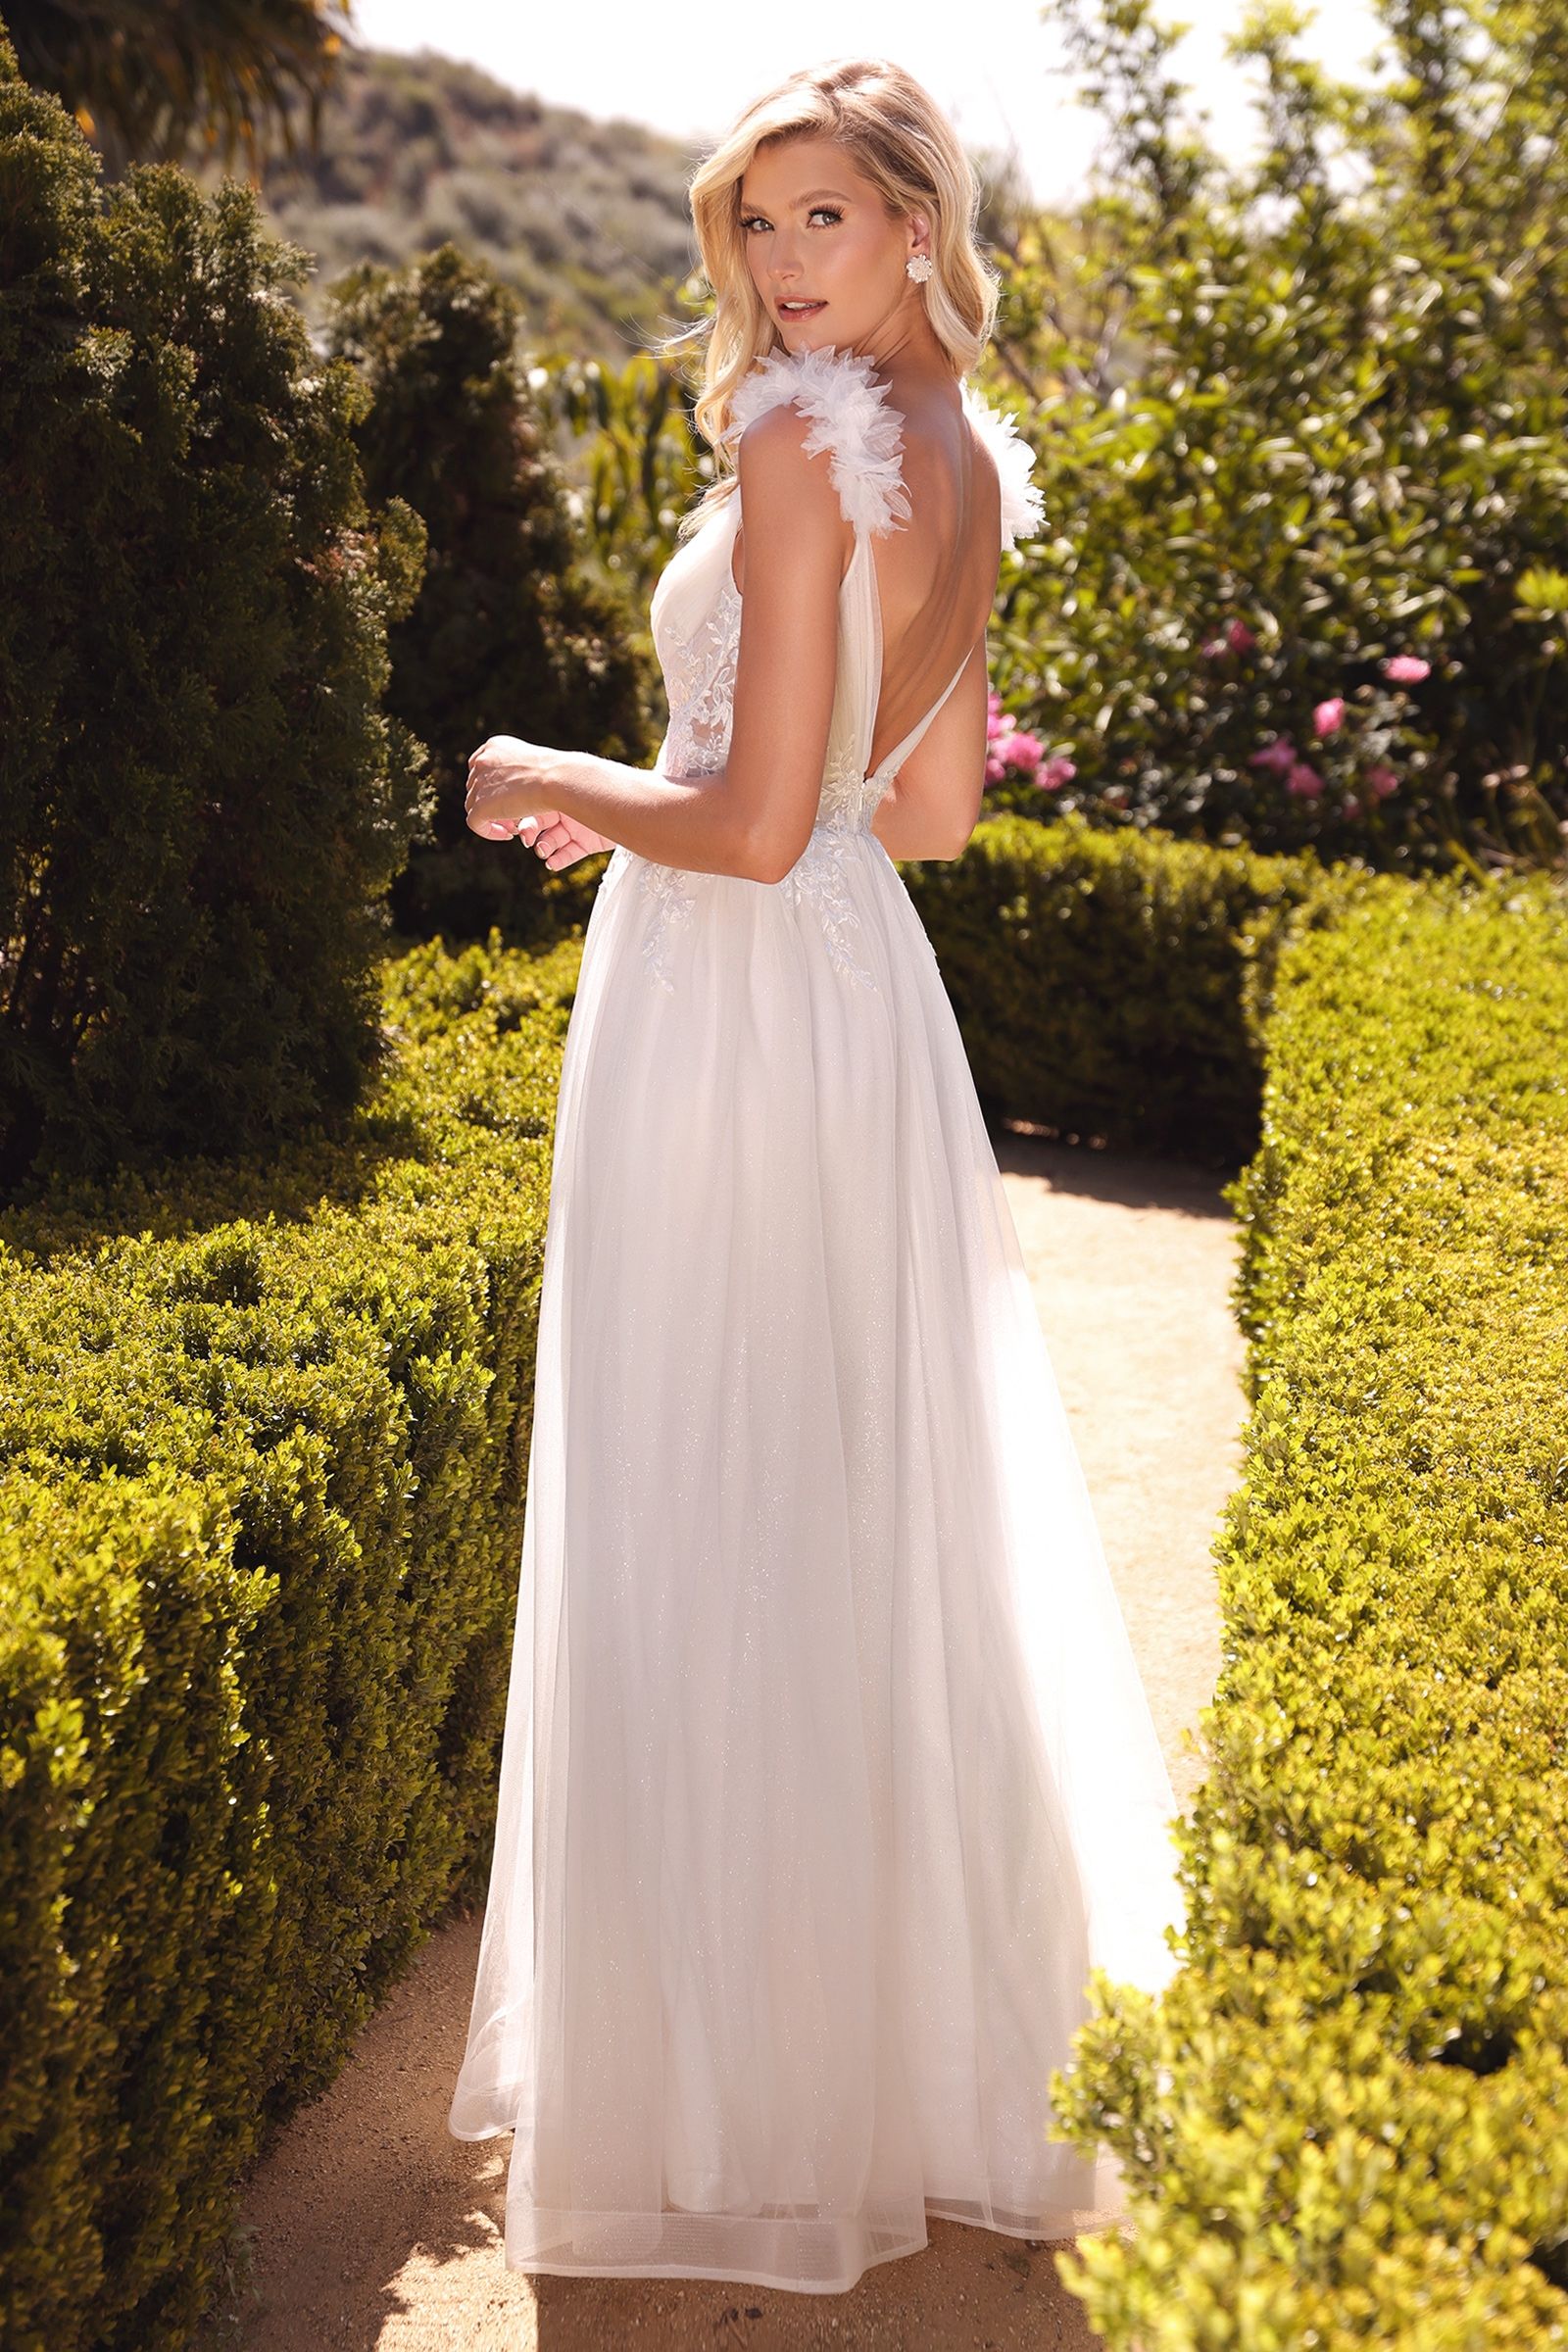 Divinity Bridal ELEONORA Cap Sleeve Bodice A Line Wedding Dress